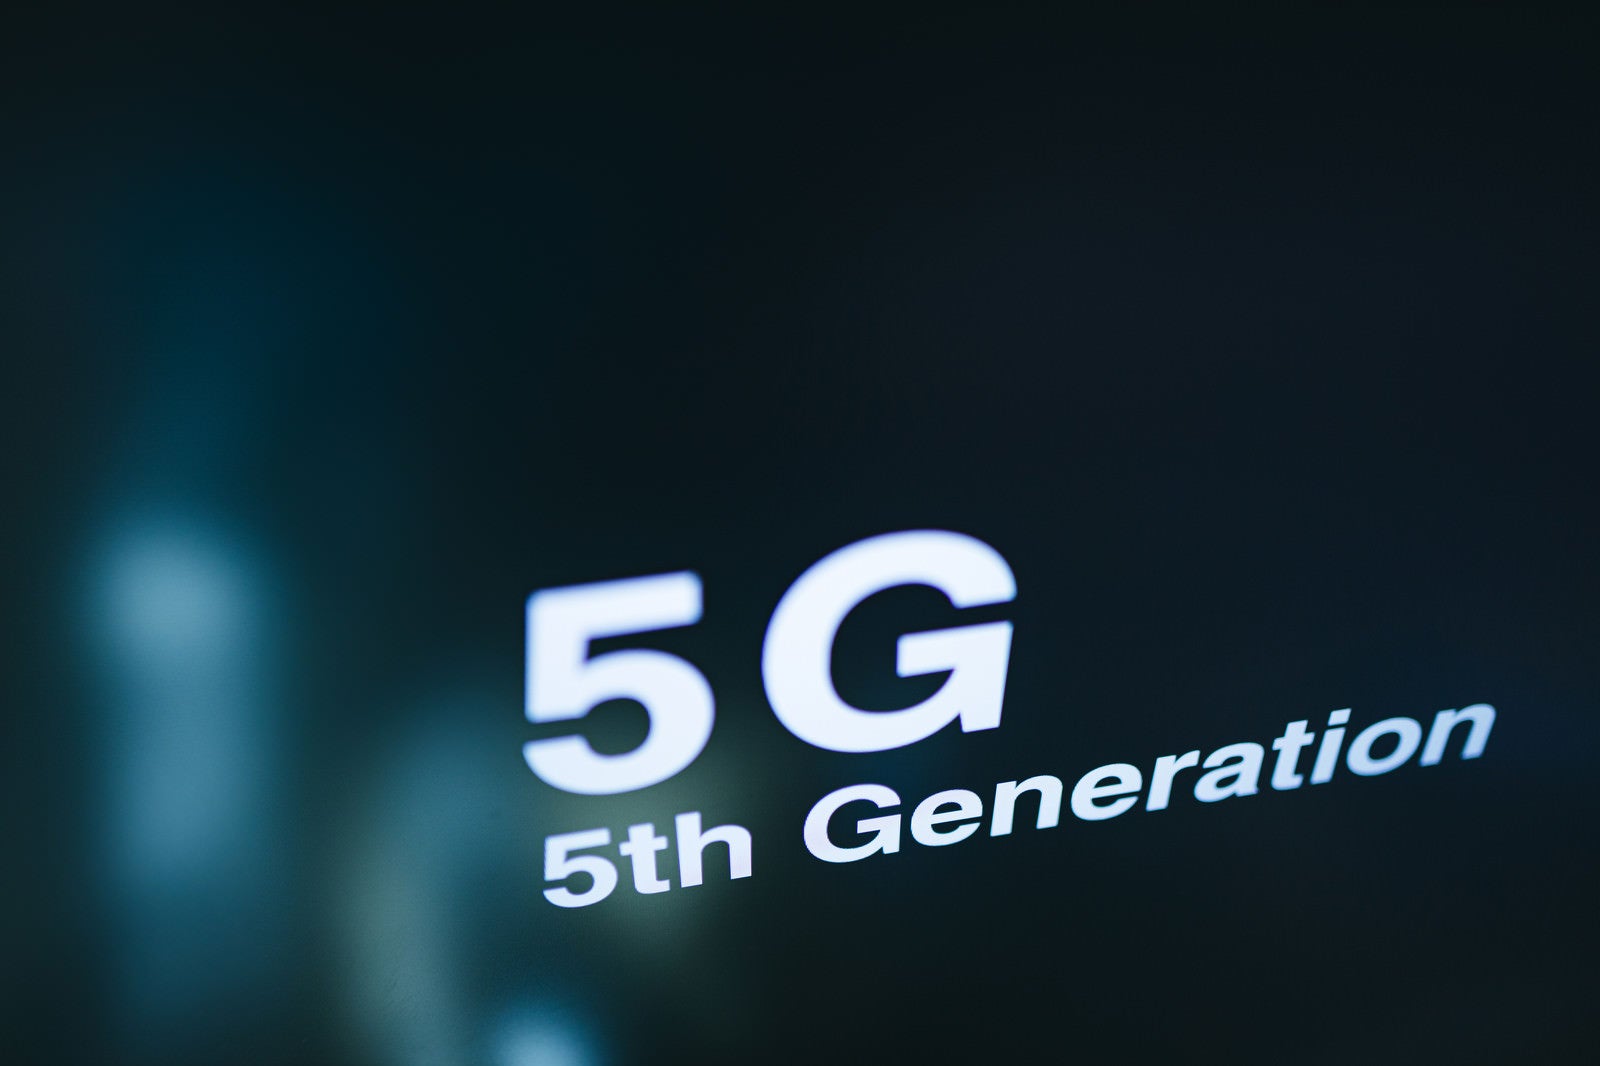 「5G（5th Generation）」の写真